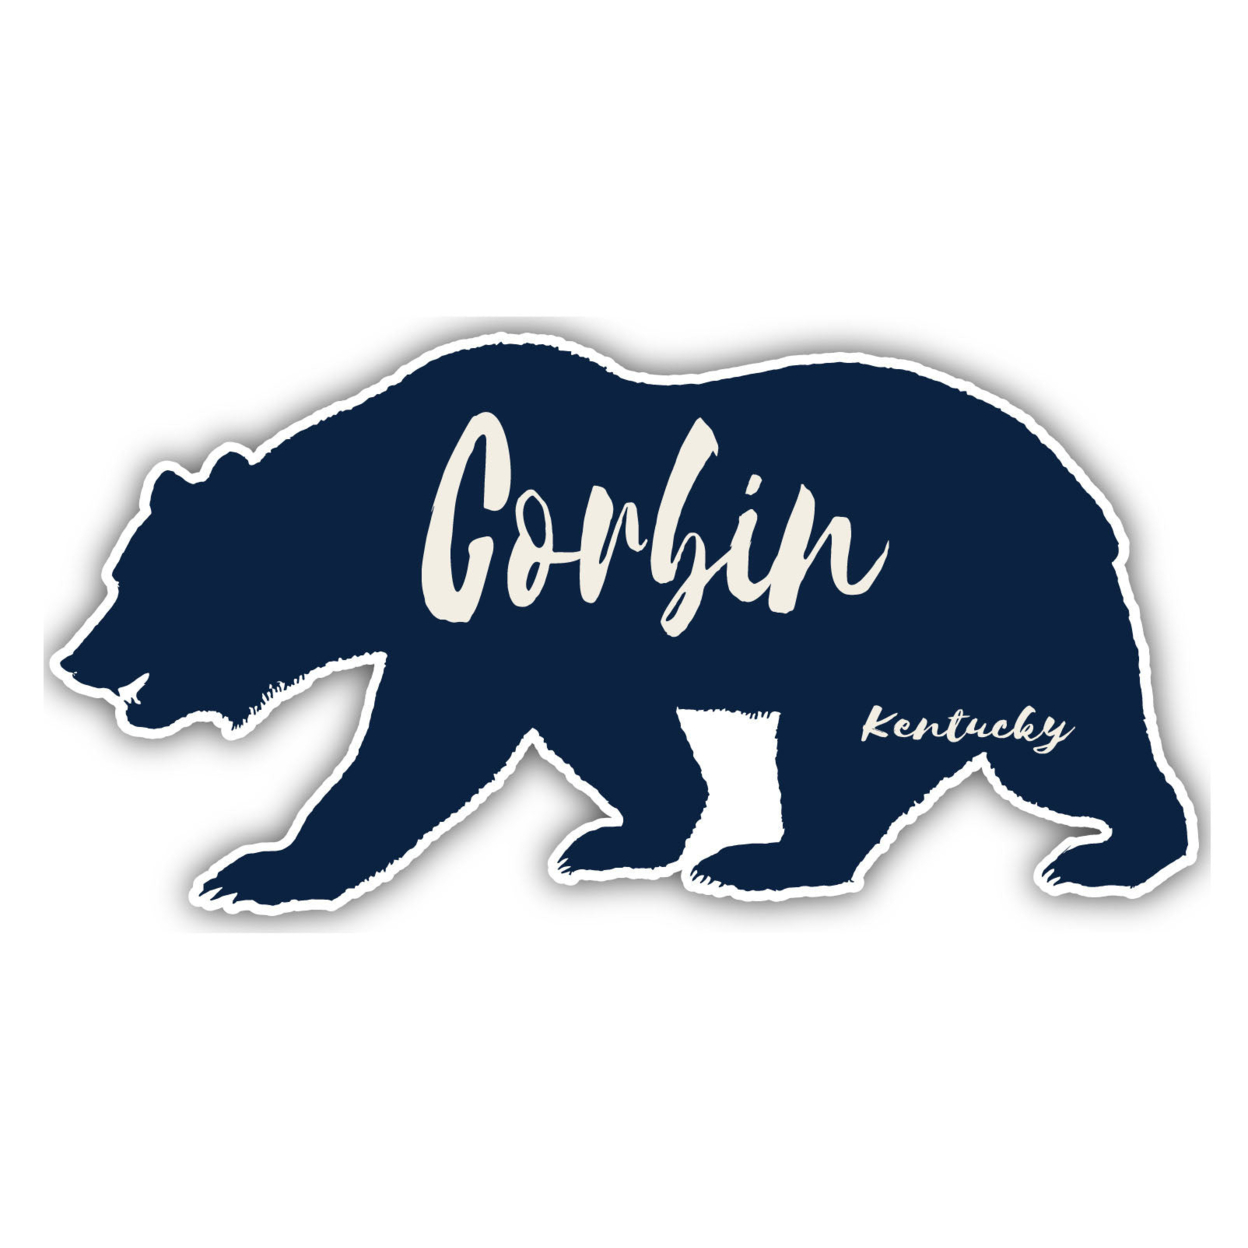 Corbin Kentucky Souvenir Decorative Stickers (Choose Theme And Size) - Single Unit, 8-Inch, Tent